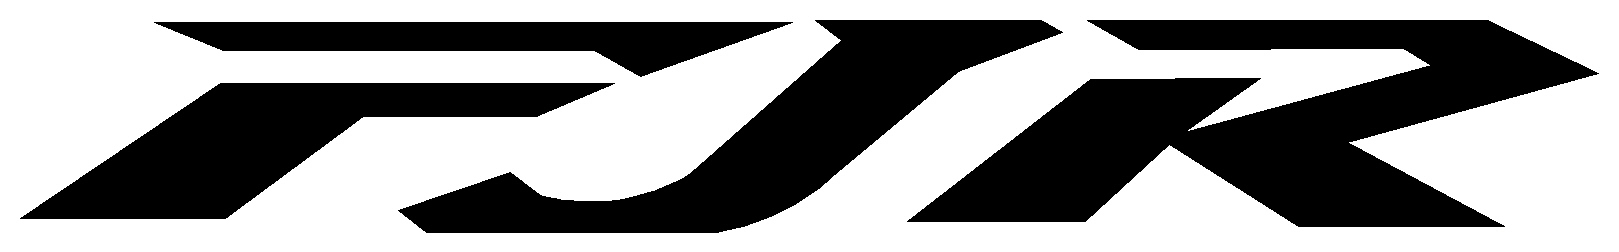 FJR logo